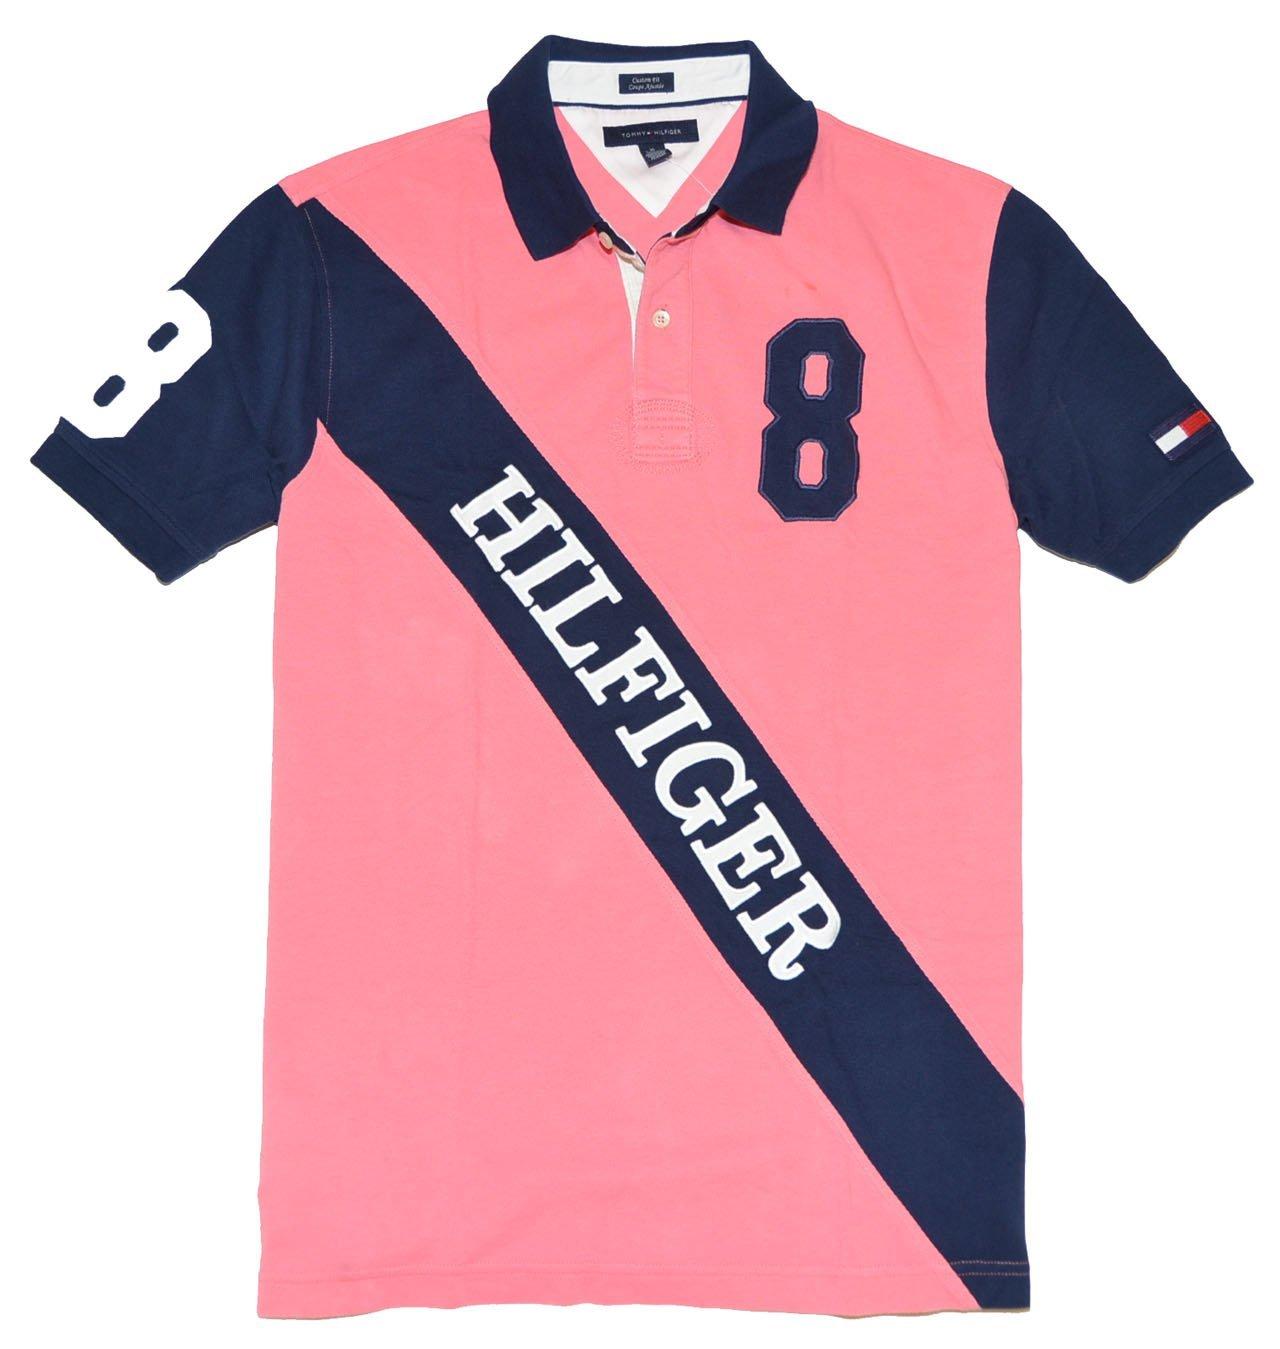 mens pink tommy hilfiger shirt